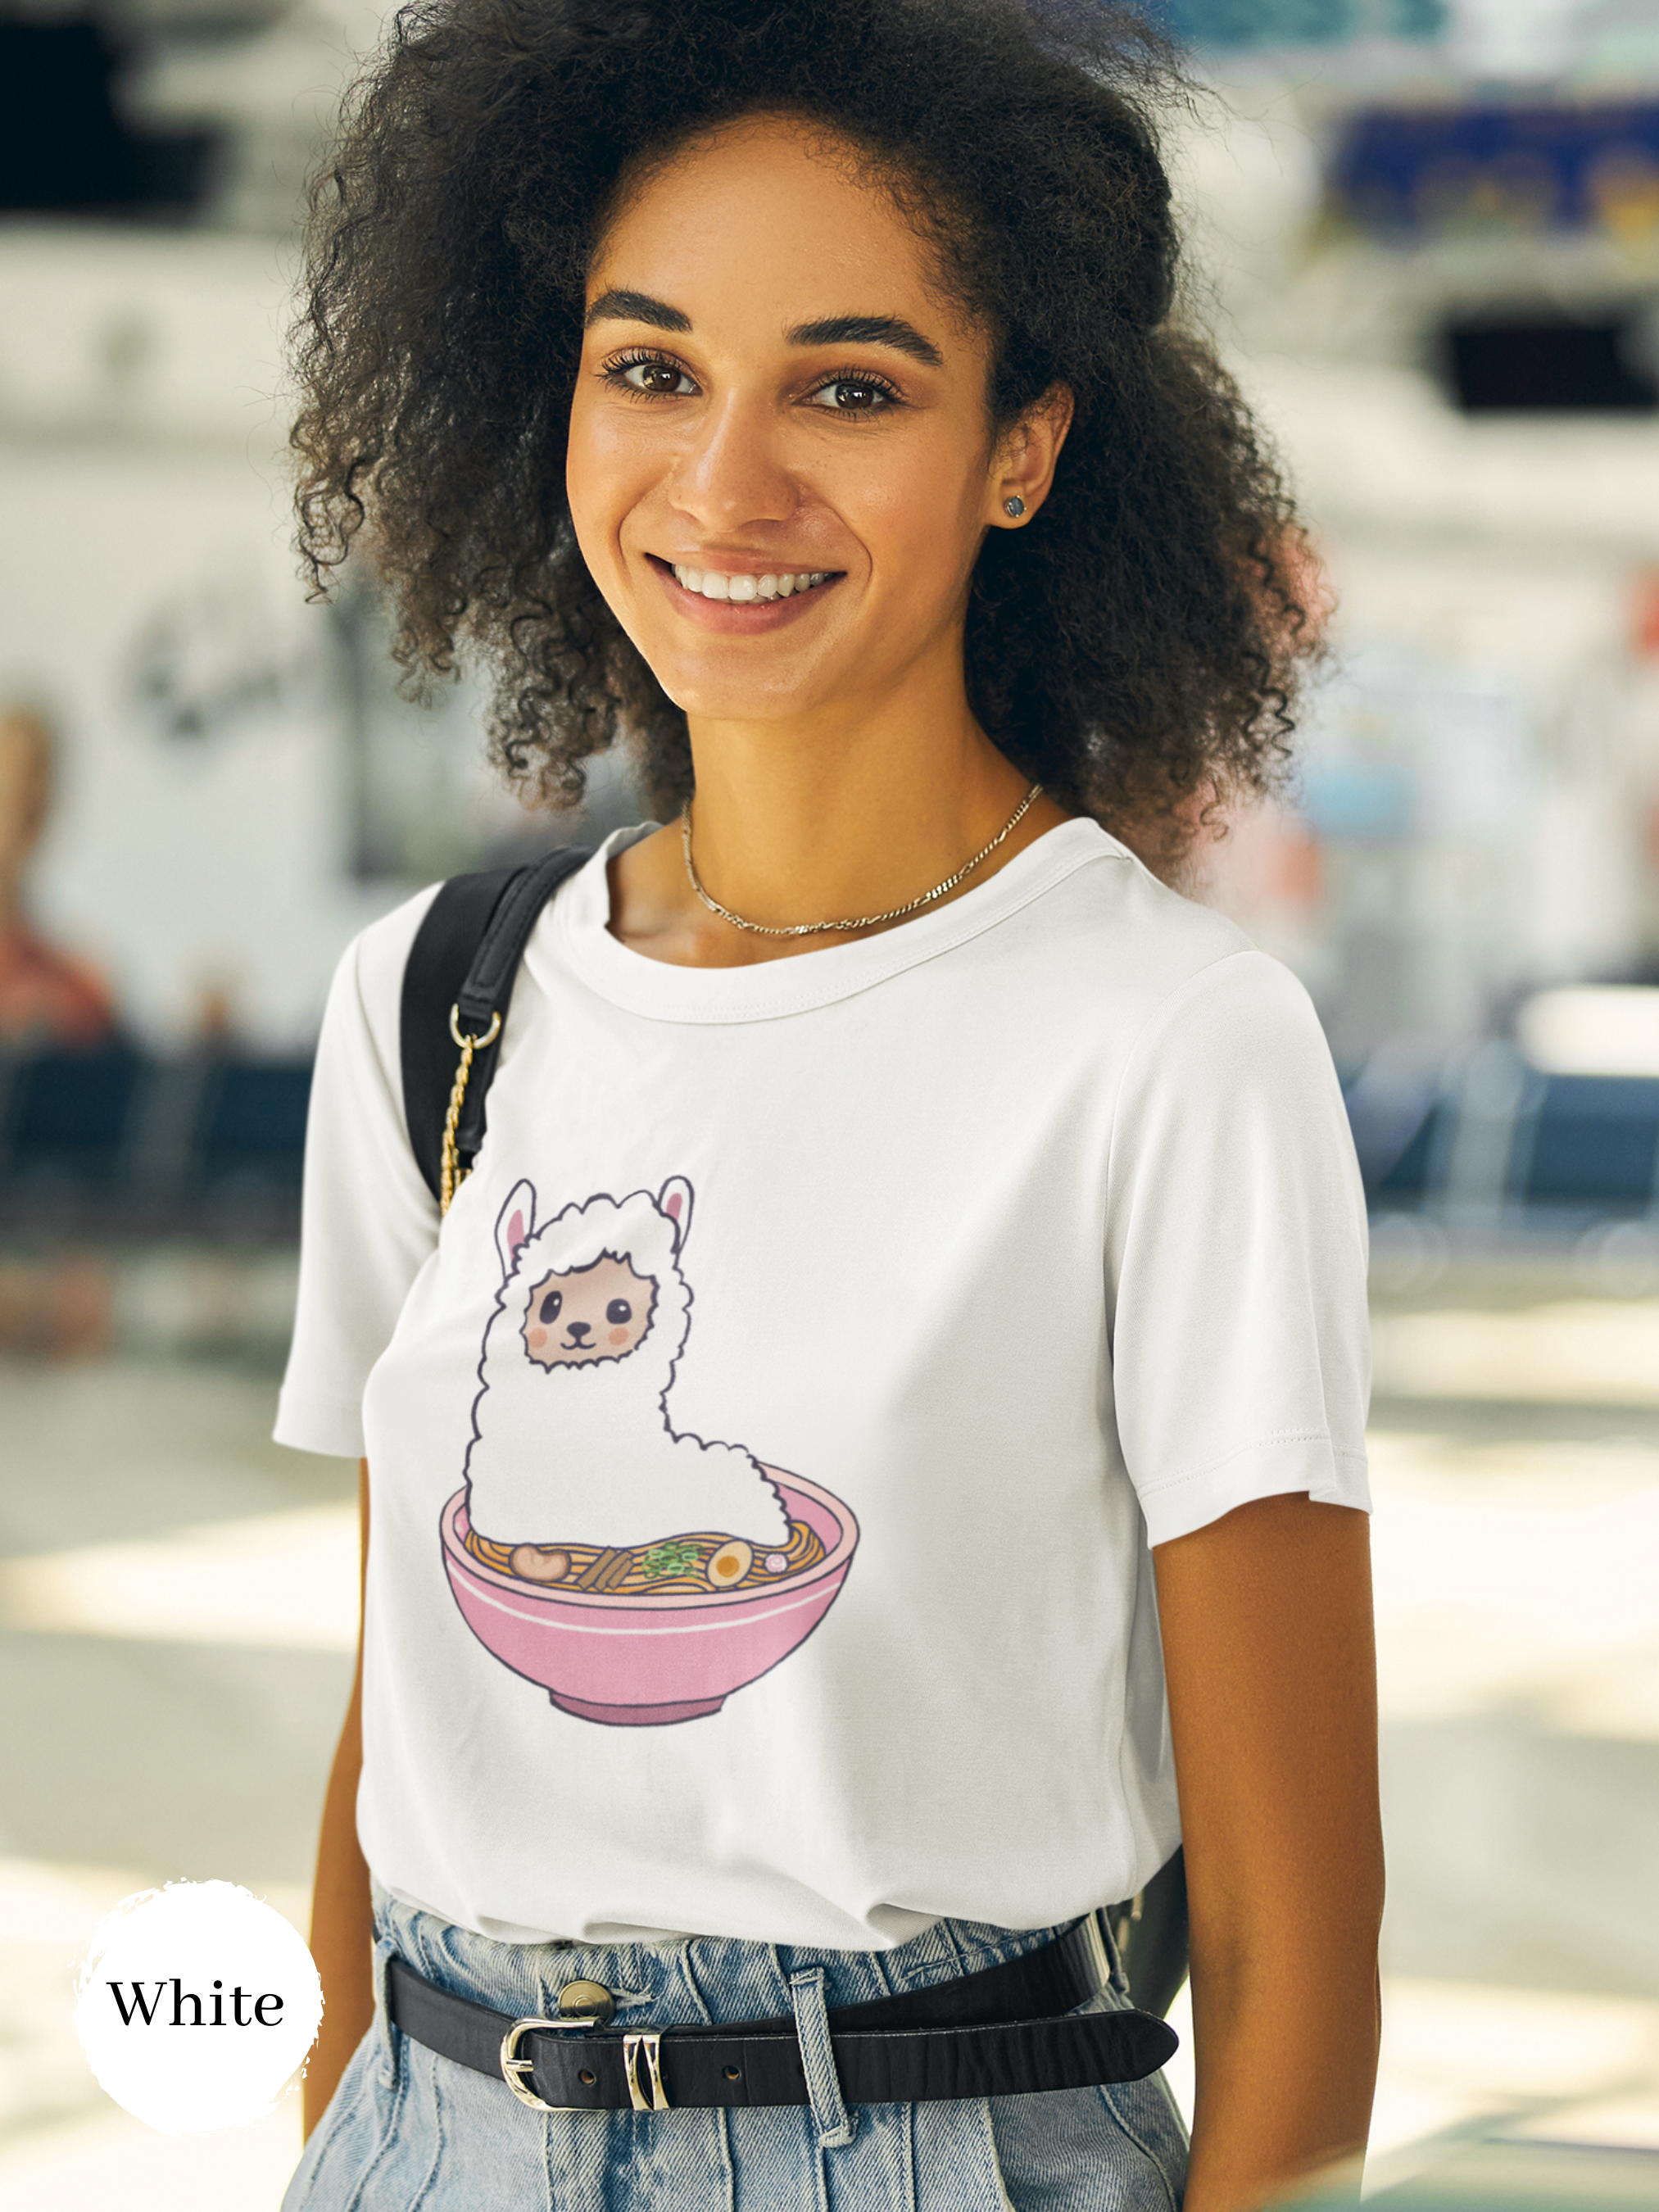 Ramen T-shirt with Llama in Japanese Ramen Bowl - Foodie Shirt for Ramen Art Fans